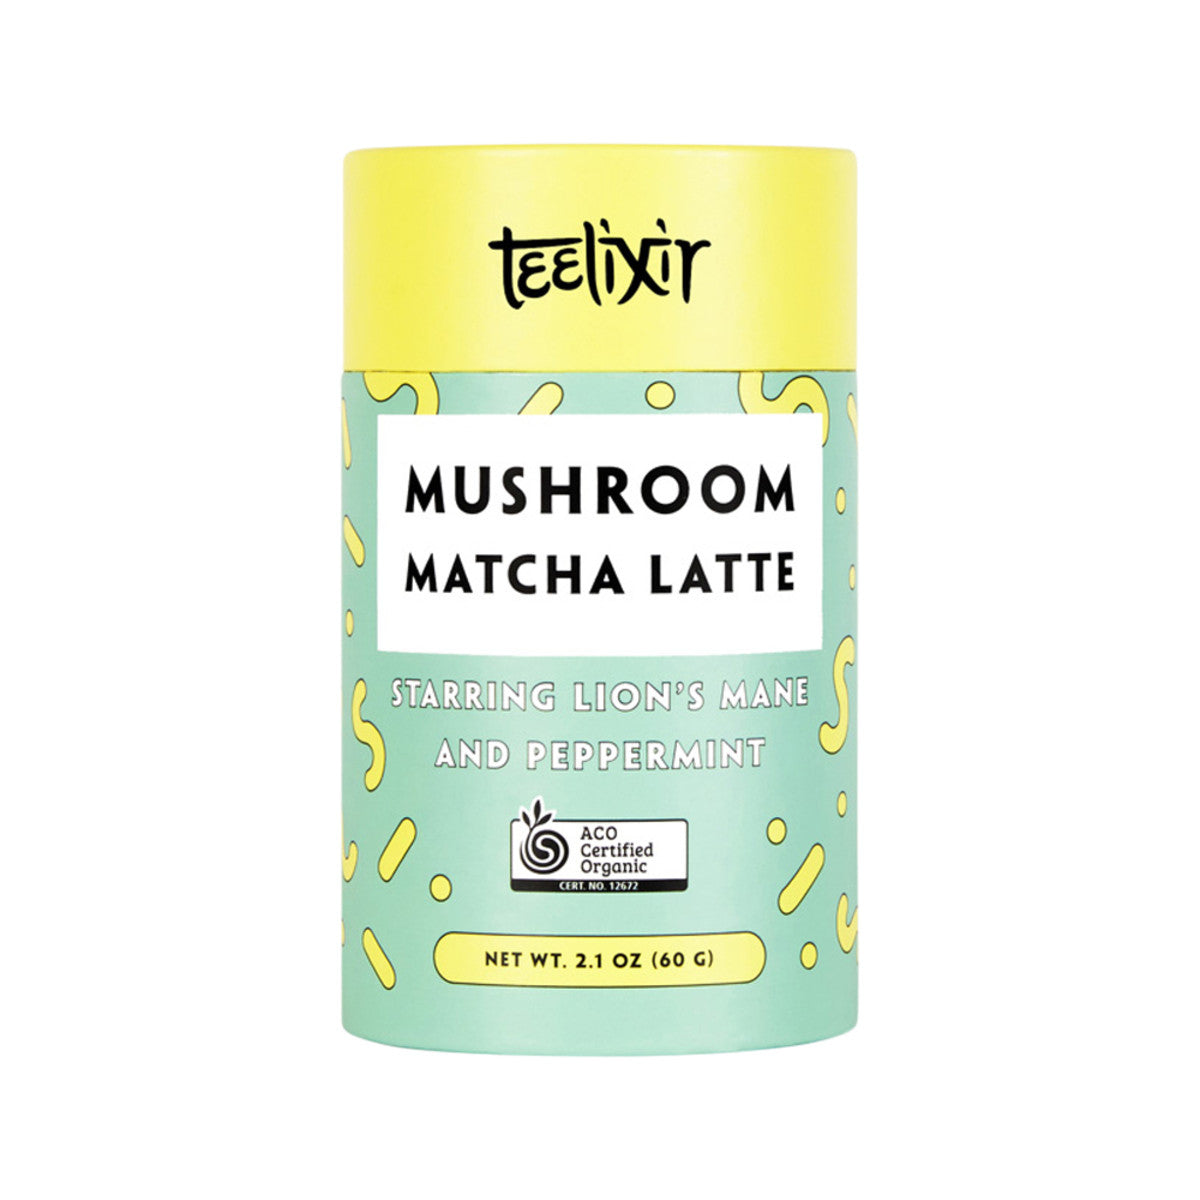 Teelixir Organic Mushroom Matcha Latte (Starring Lion's Mane and Peppermint) 60g